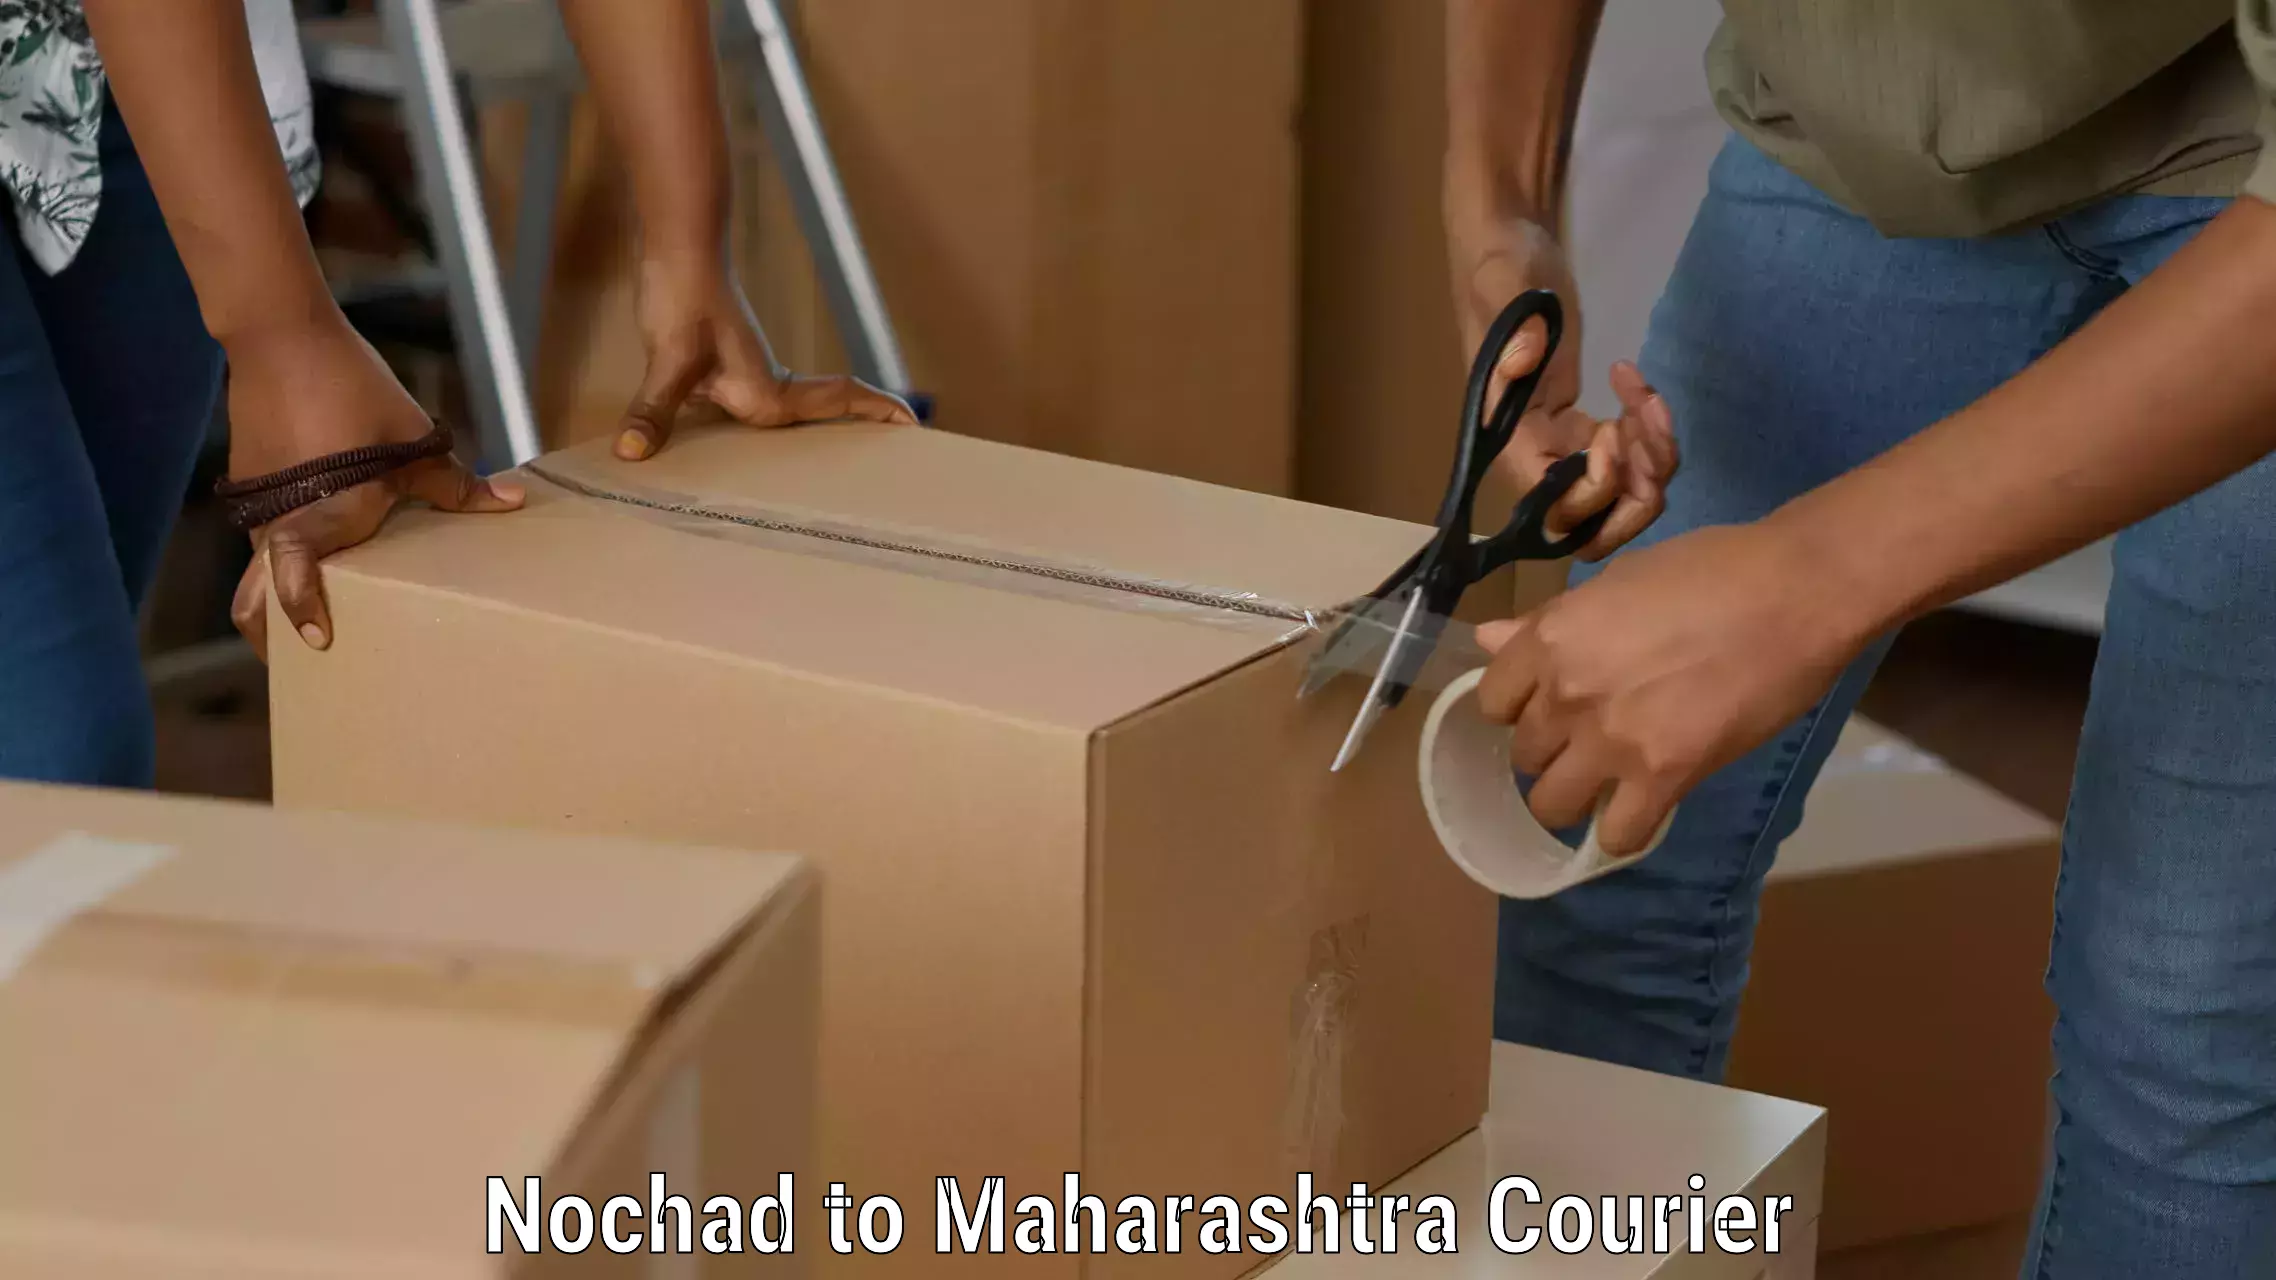 Local delivery service Nochad to Maharashtra